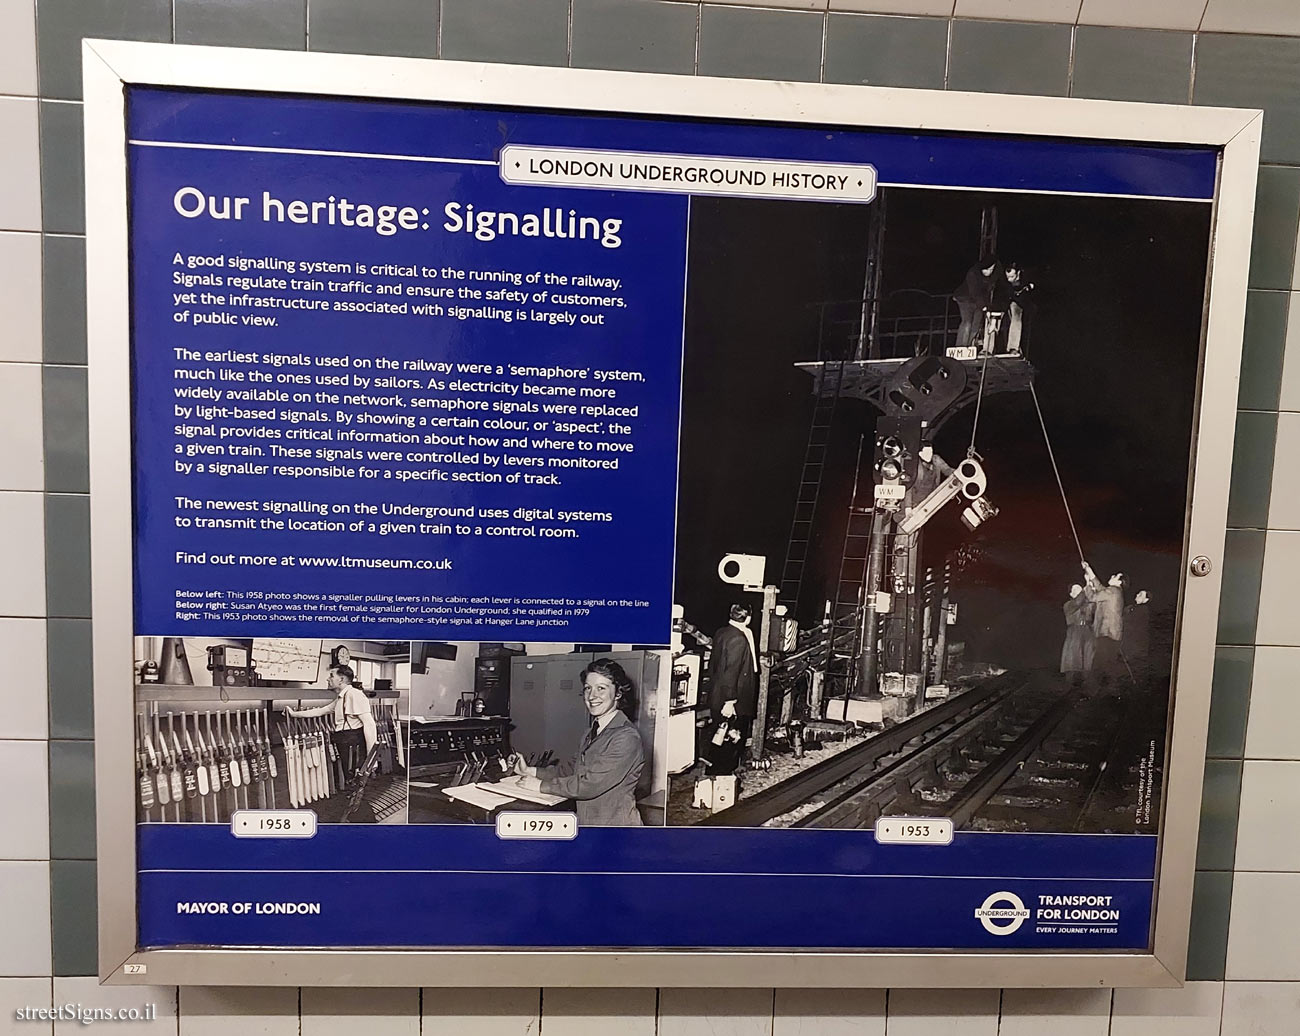 London -  London Underground History - Our heritage: Signalling